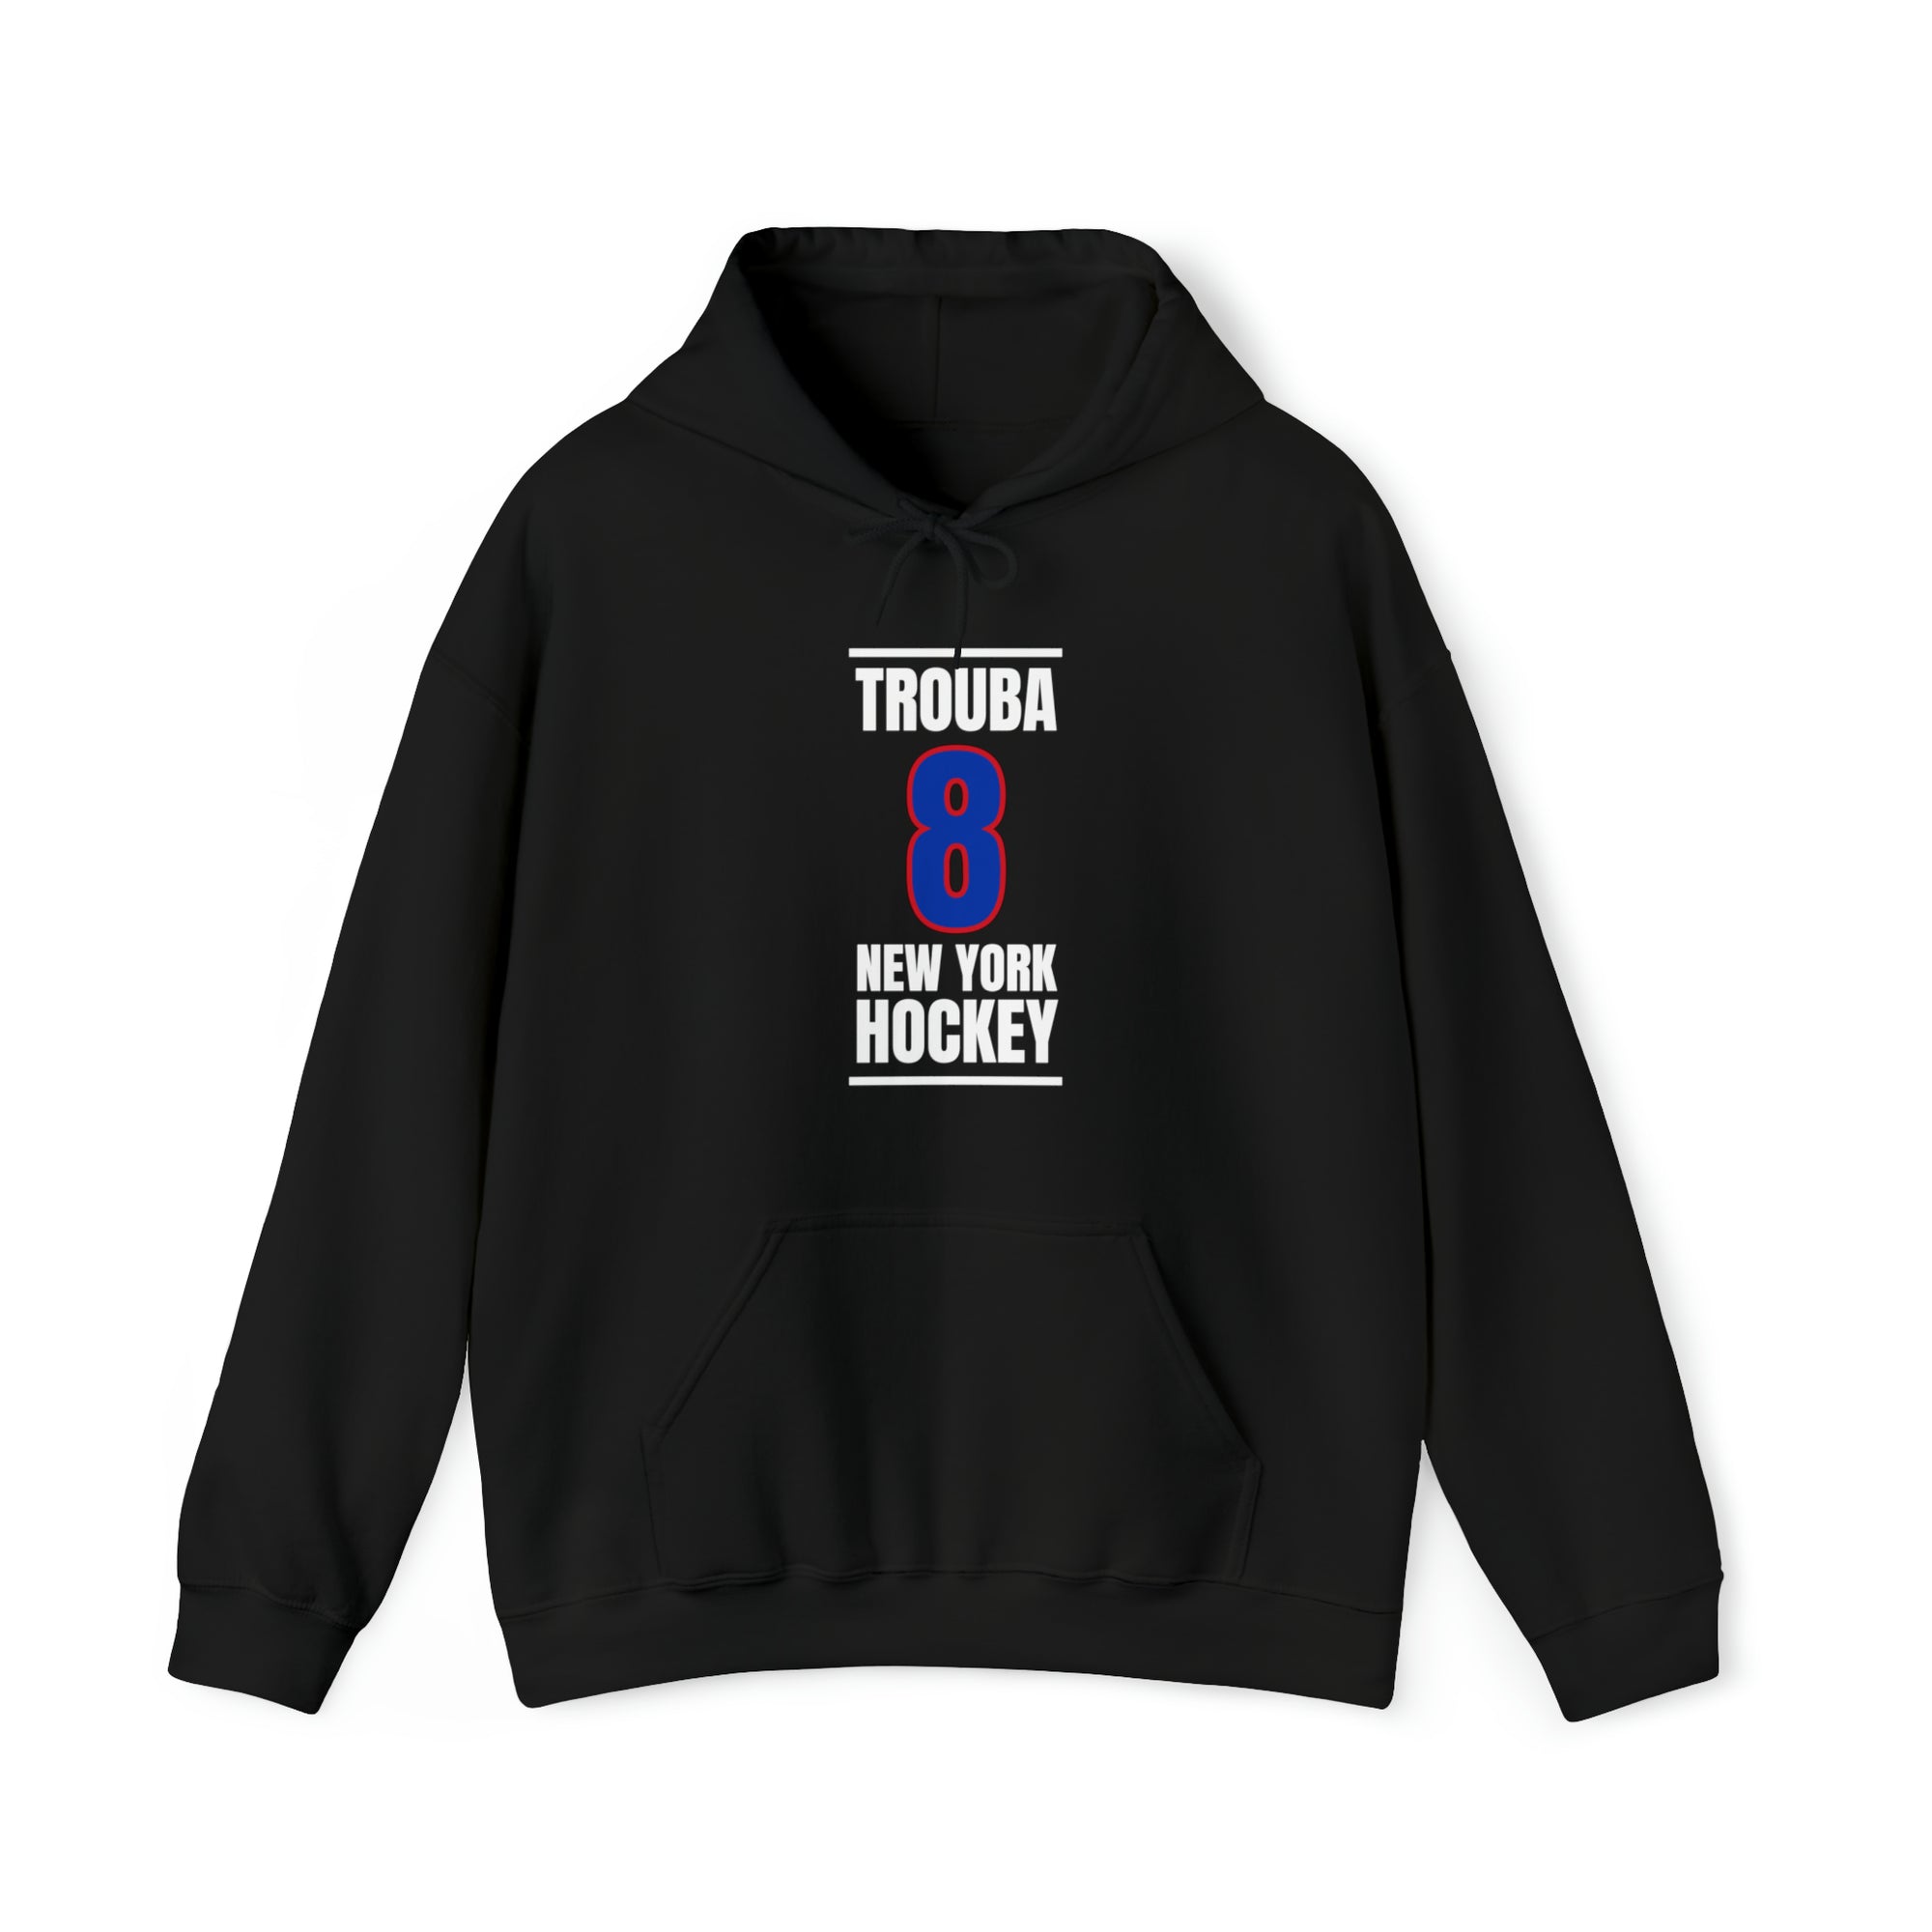 Trouba 8 New York Hockey Royal Blue Vertical Design Unisex Hooded Sweatshirt